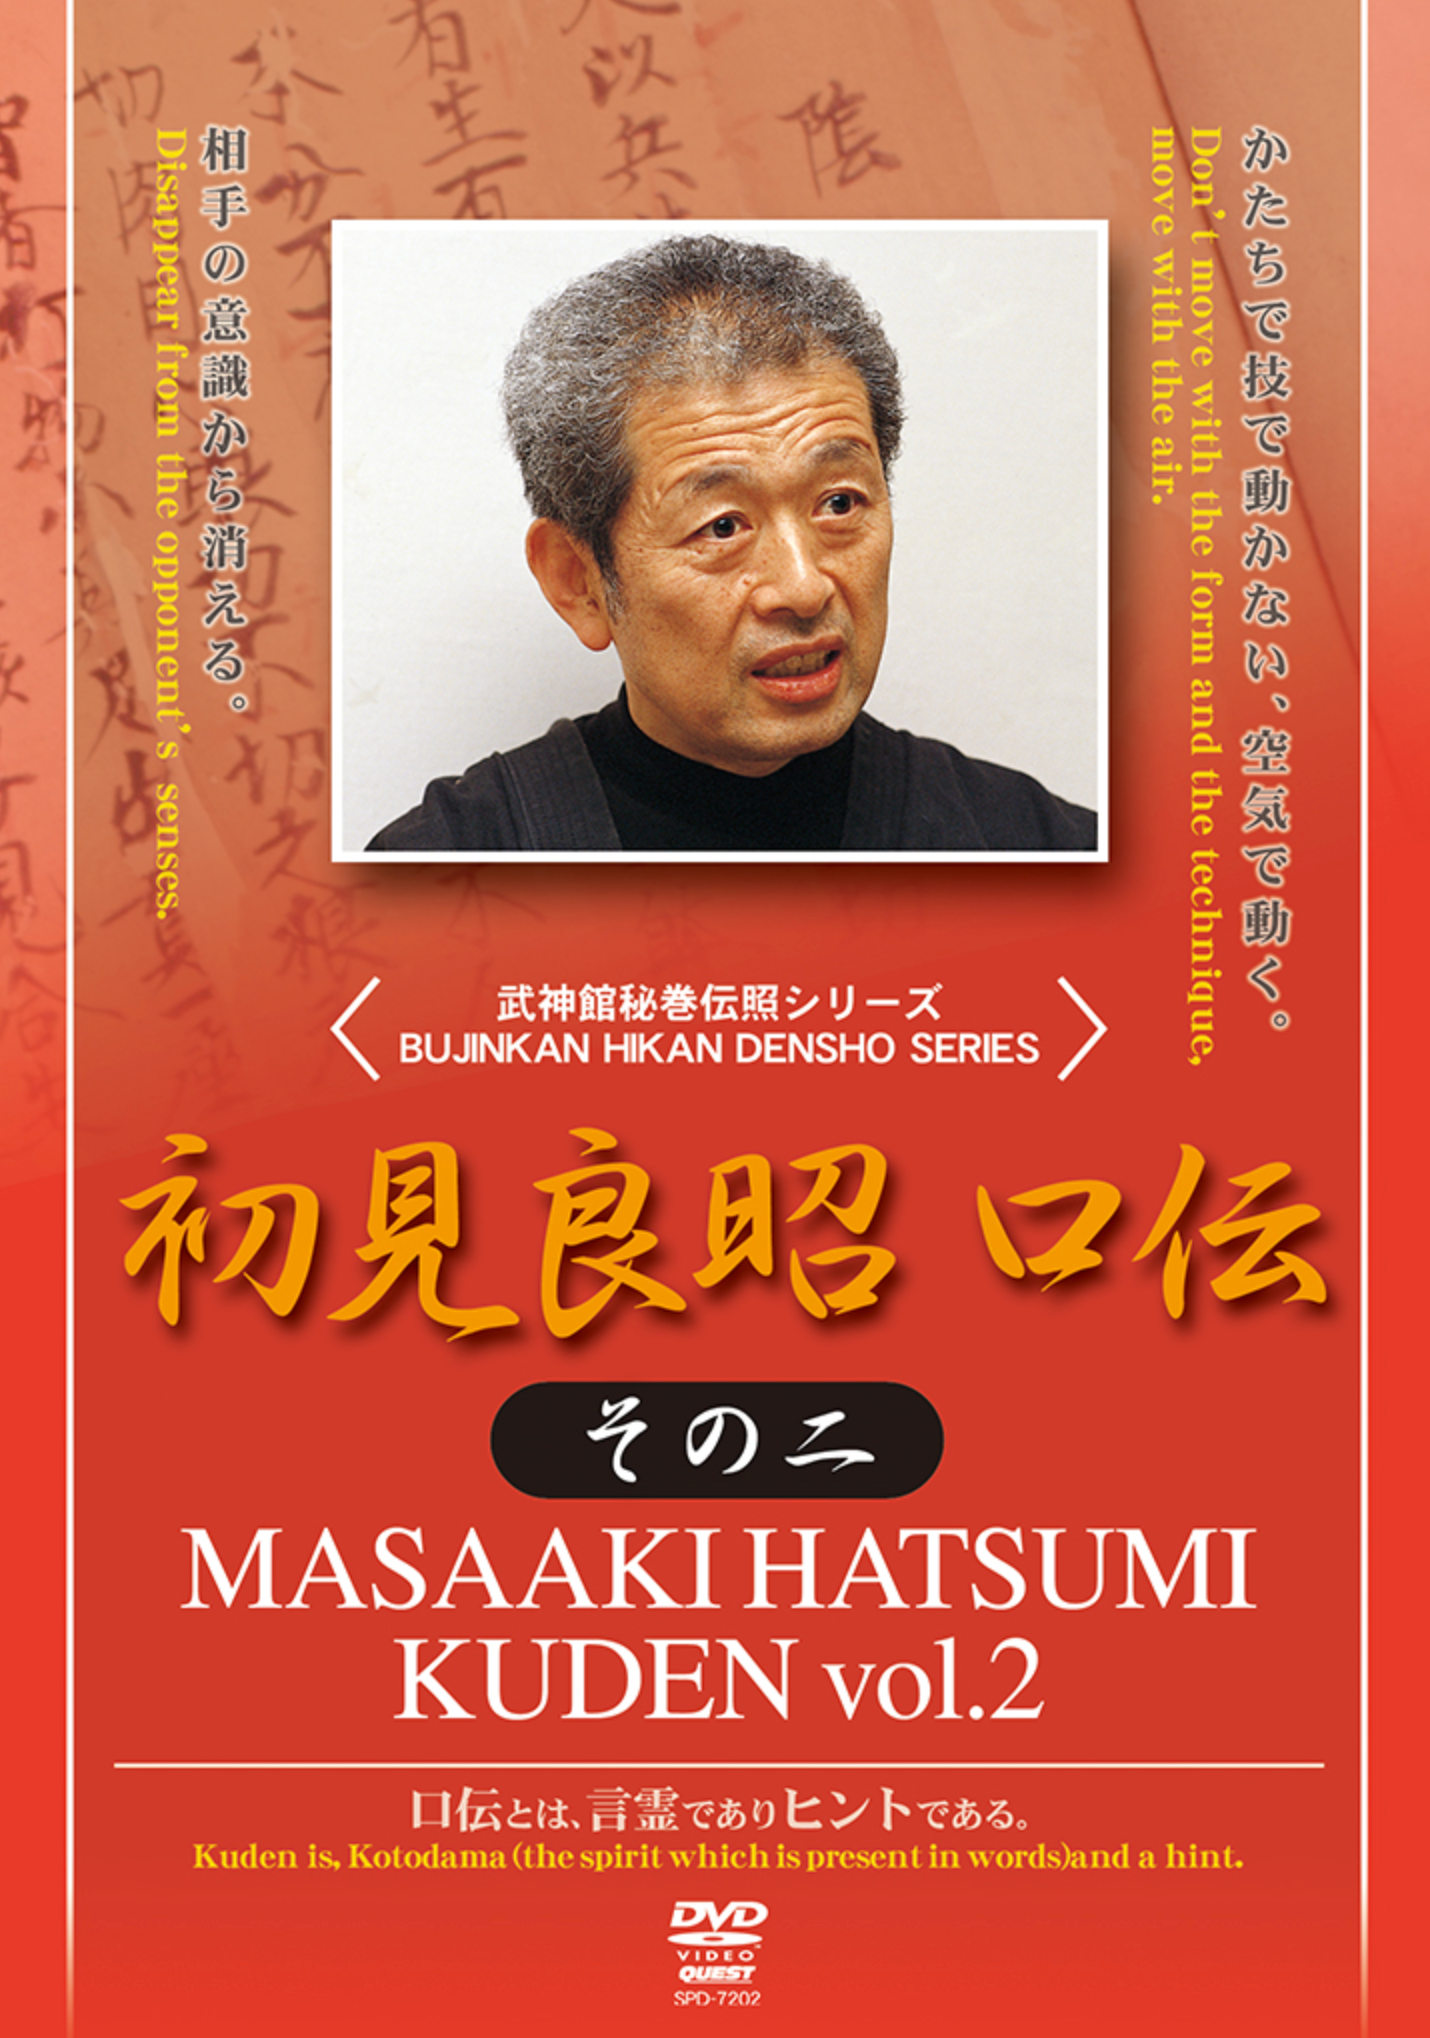 Kuden Vol 2 DVD with Masaaki Hatsumi - Budovideos Inc